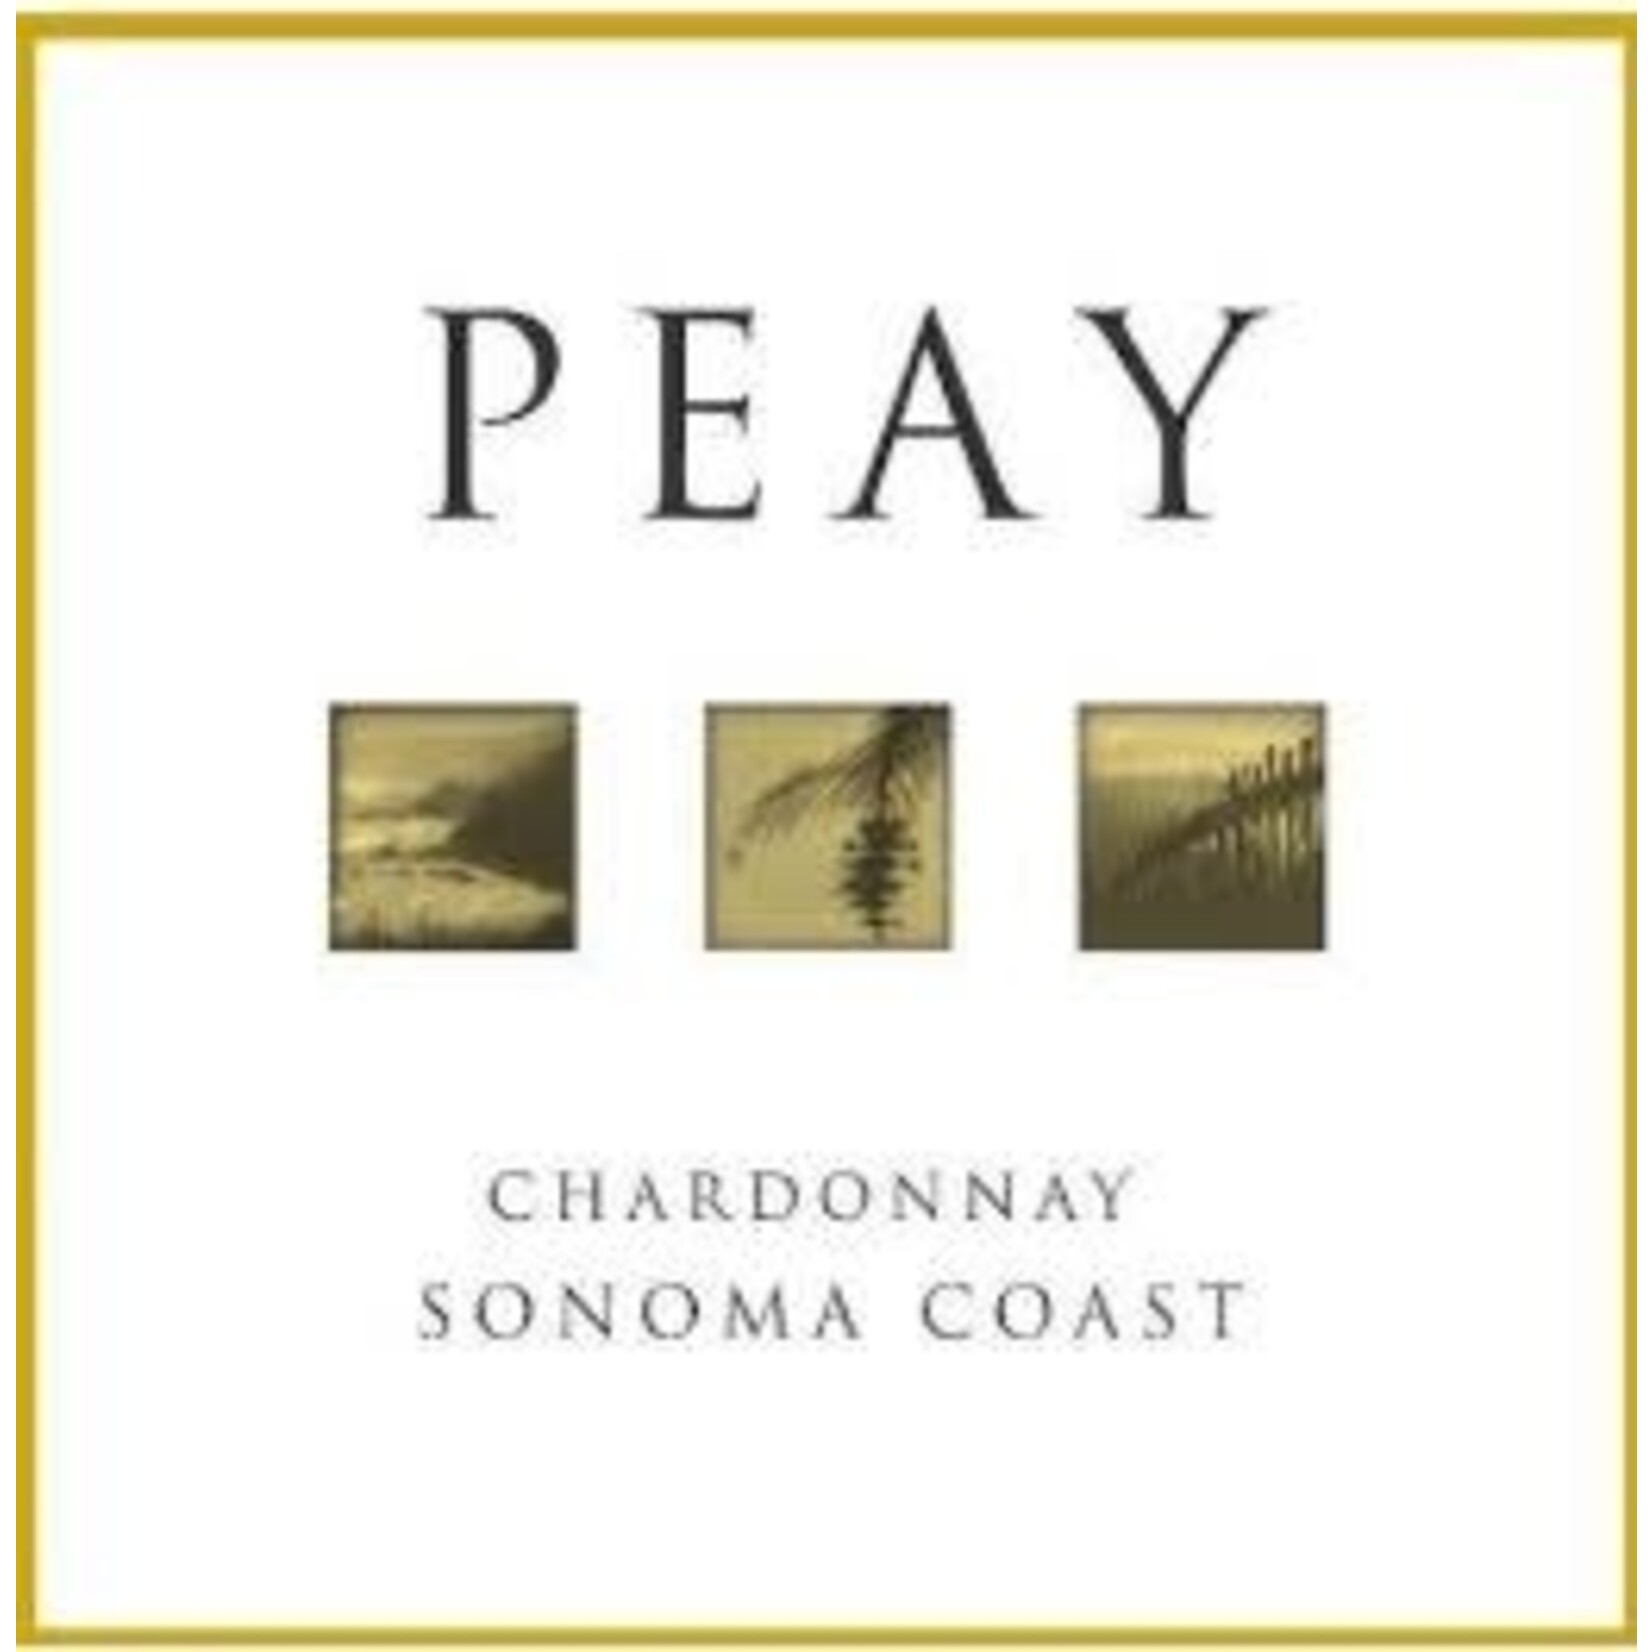 Peay Sonoma Coast 2020 Chardonnay